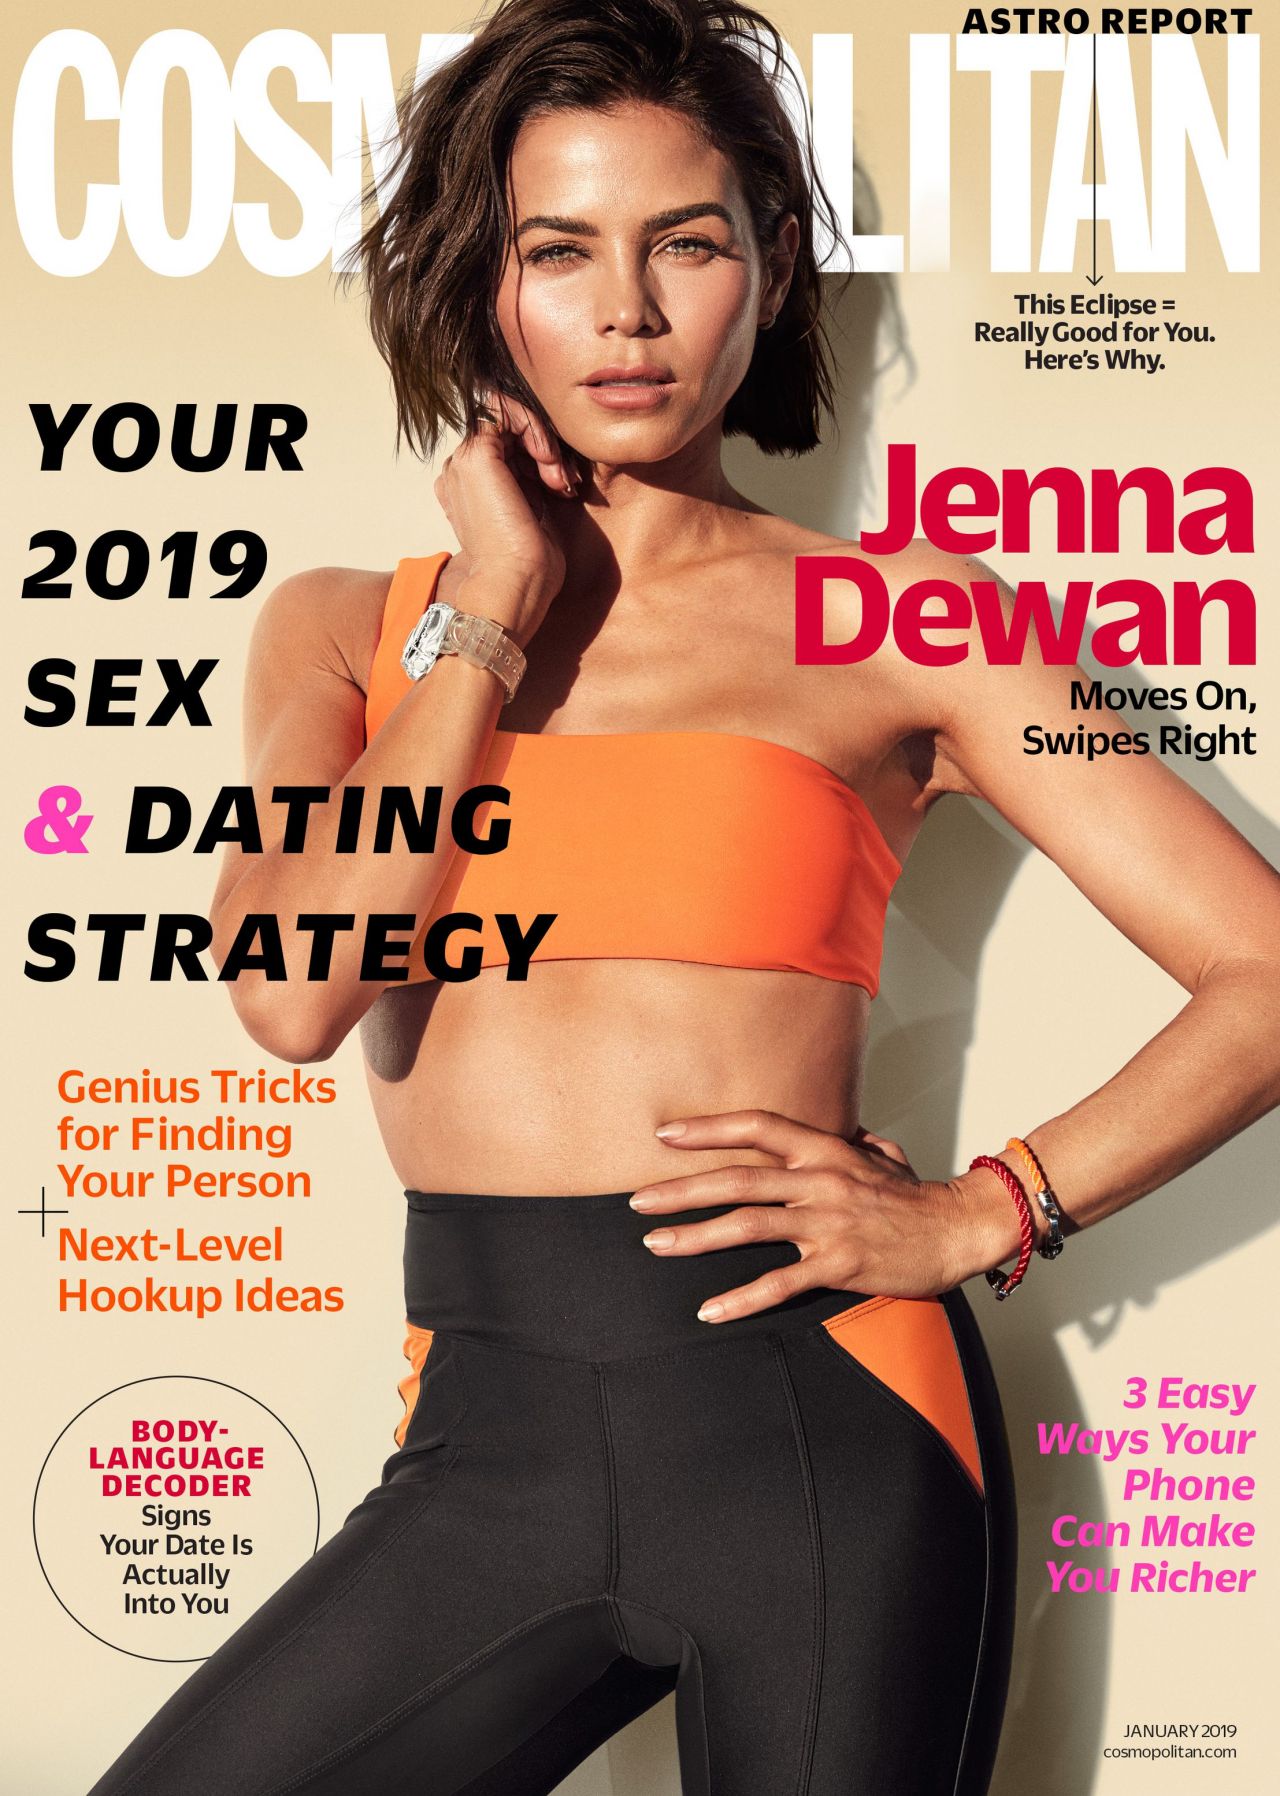 Jenna Dewan Cosmopolitan Magazine January 2019 Cover And Photos.